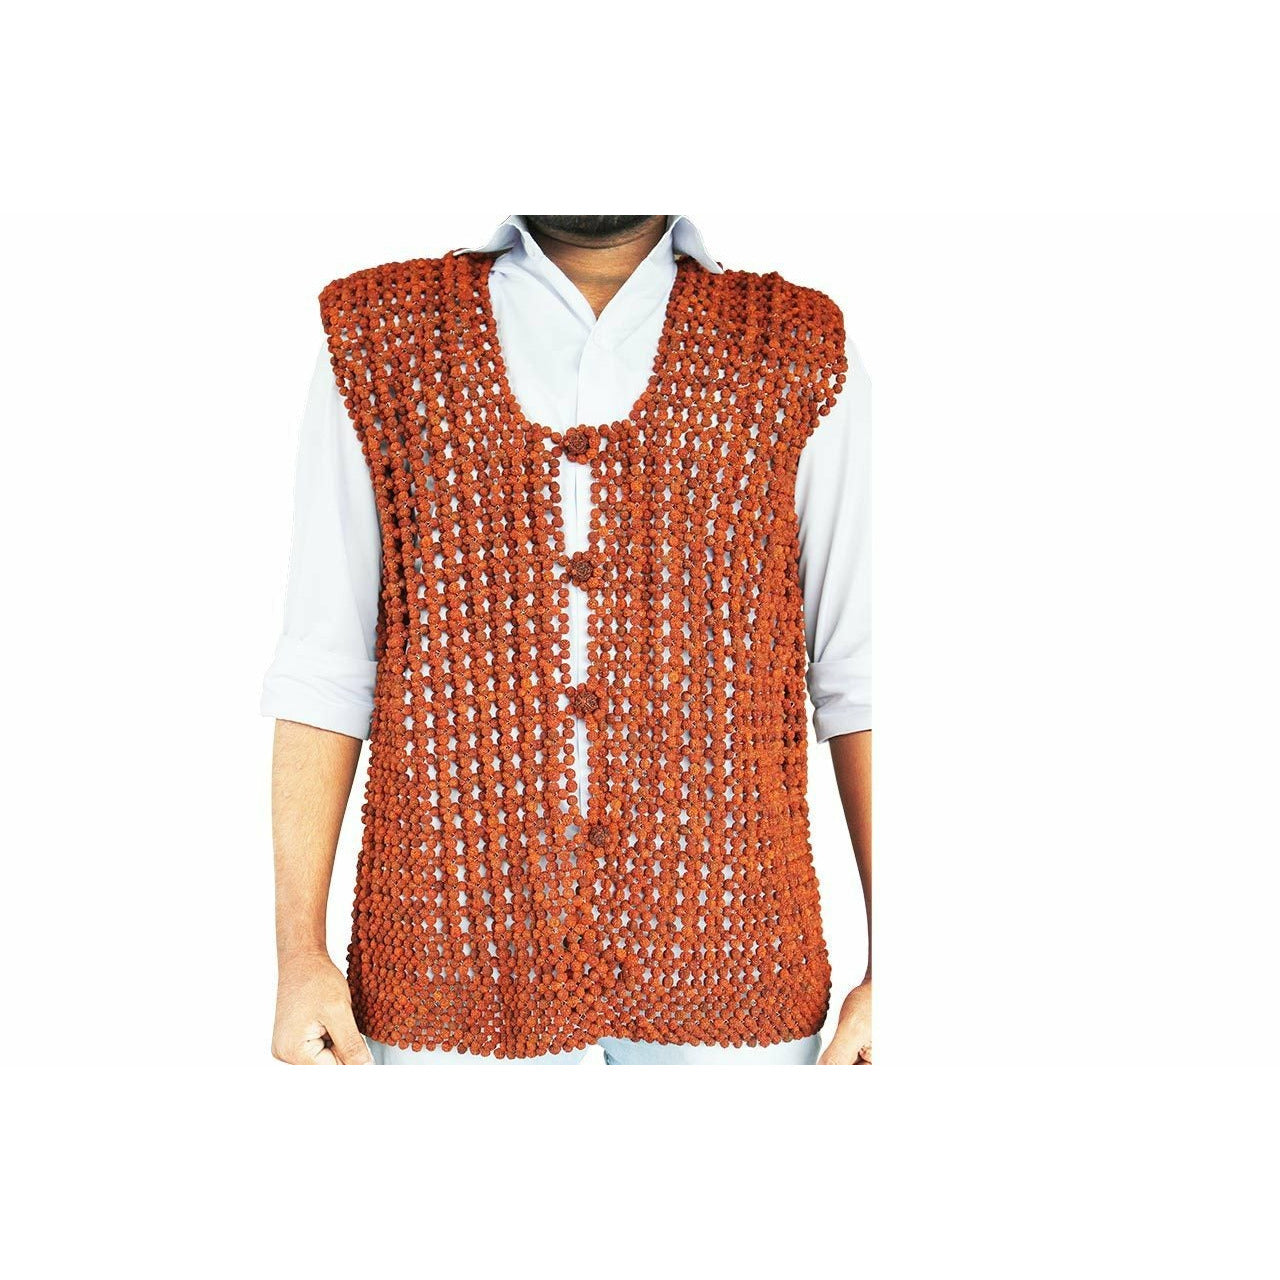 Fantastic vest from Rudrakshas